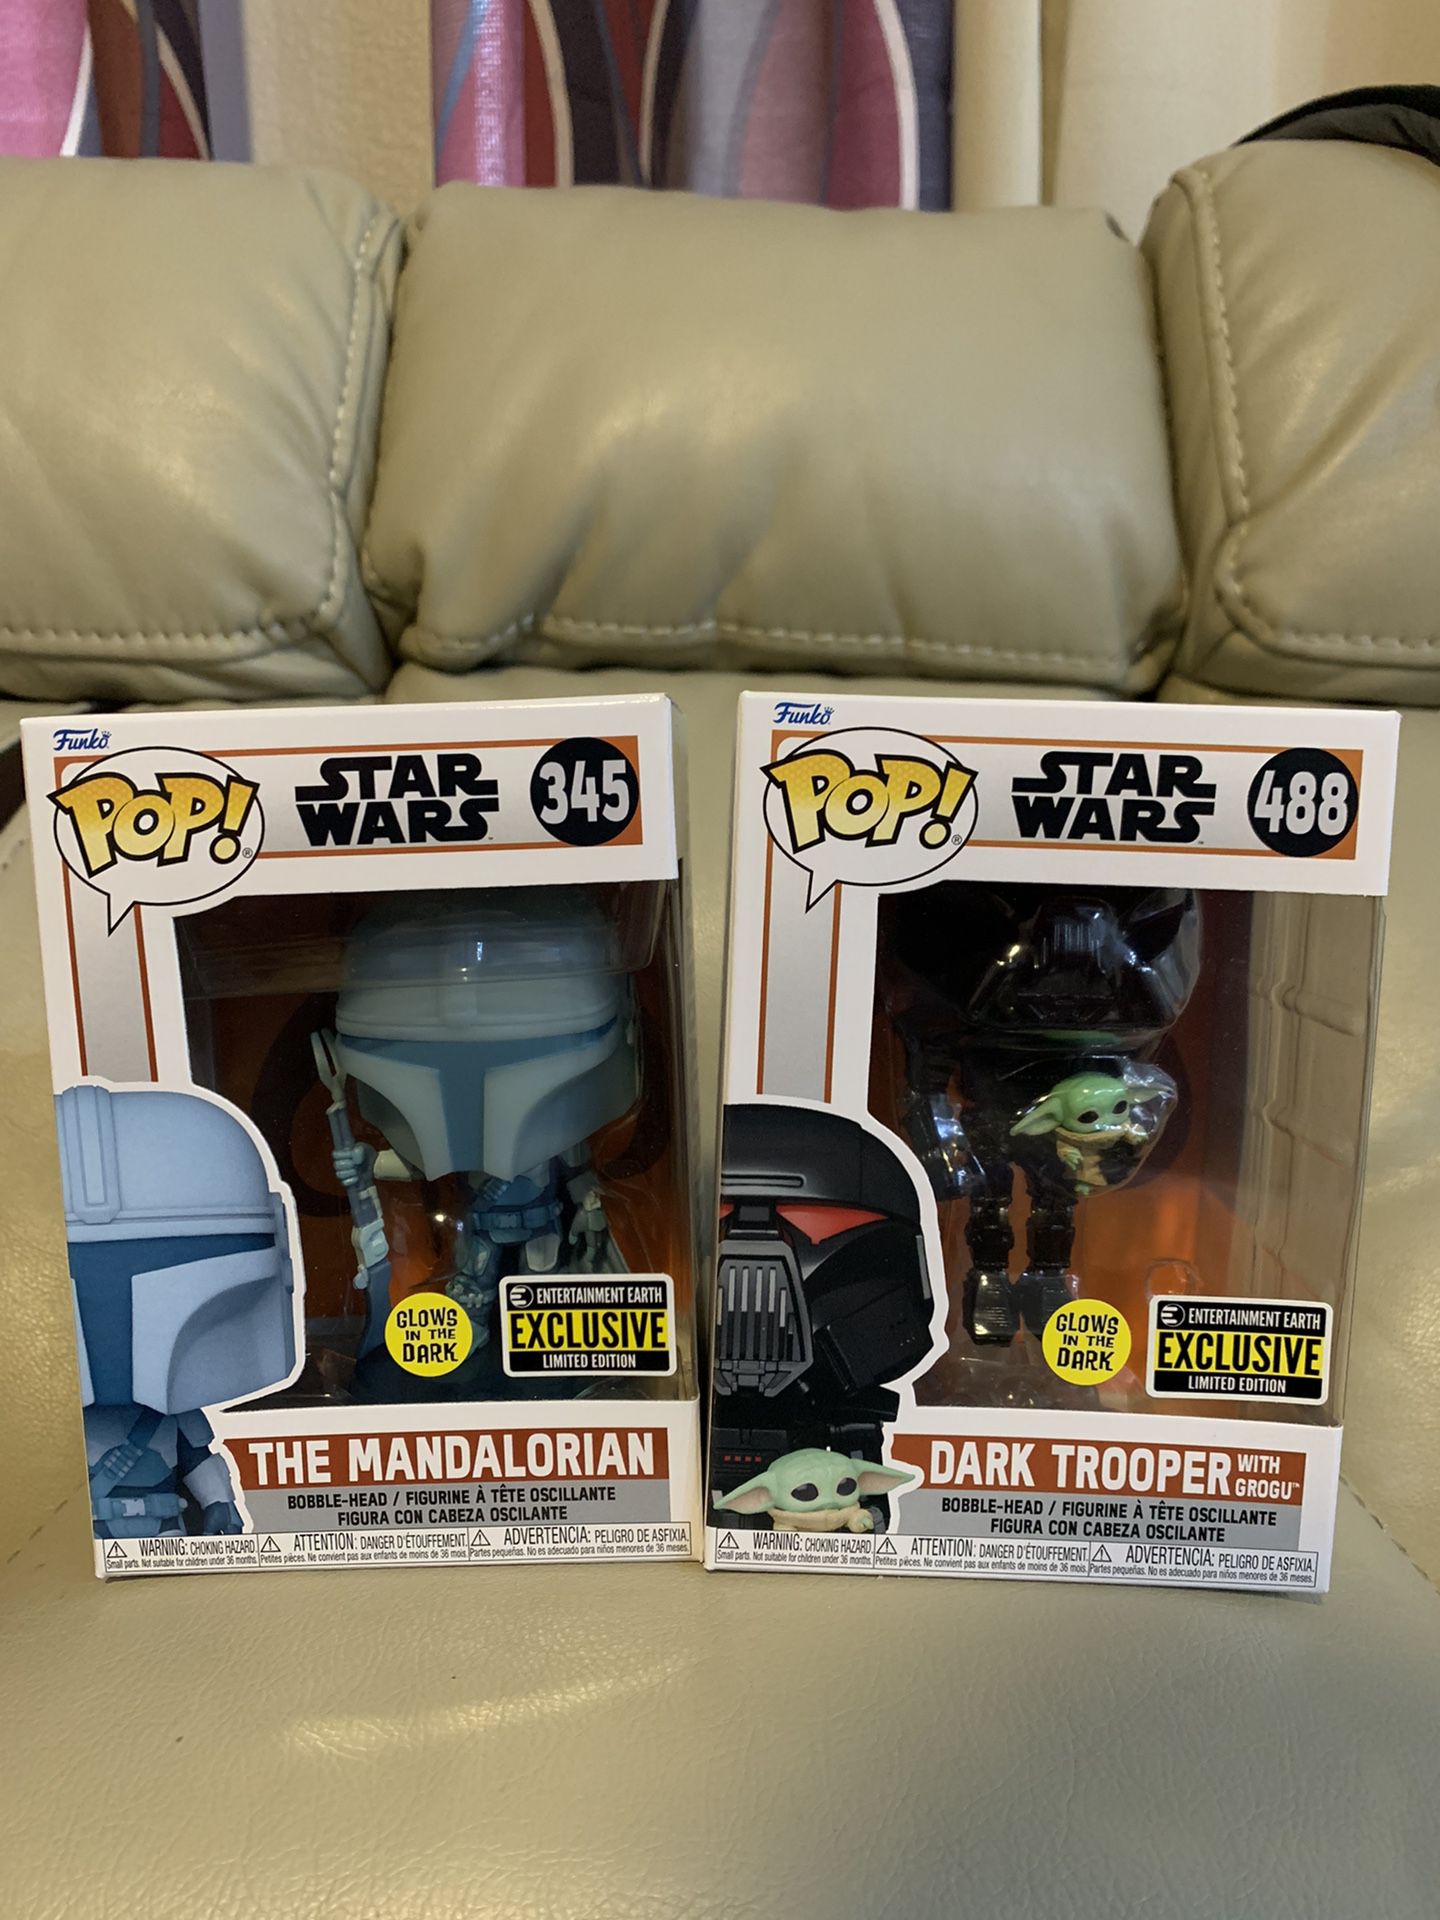 POP Star Wars Mandalorian Dark Trooper with Grogu Glow-in-the-Dark